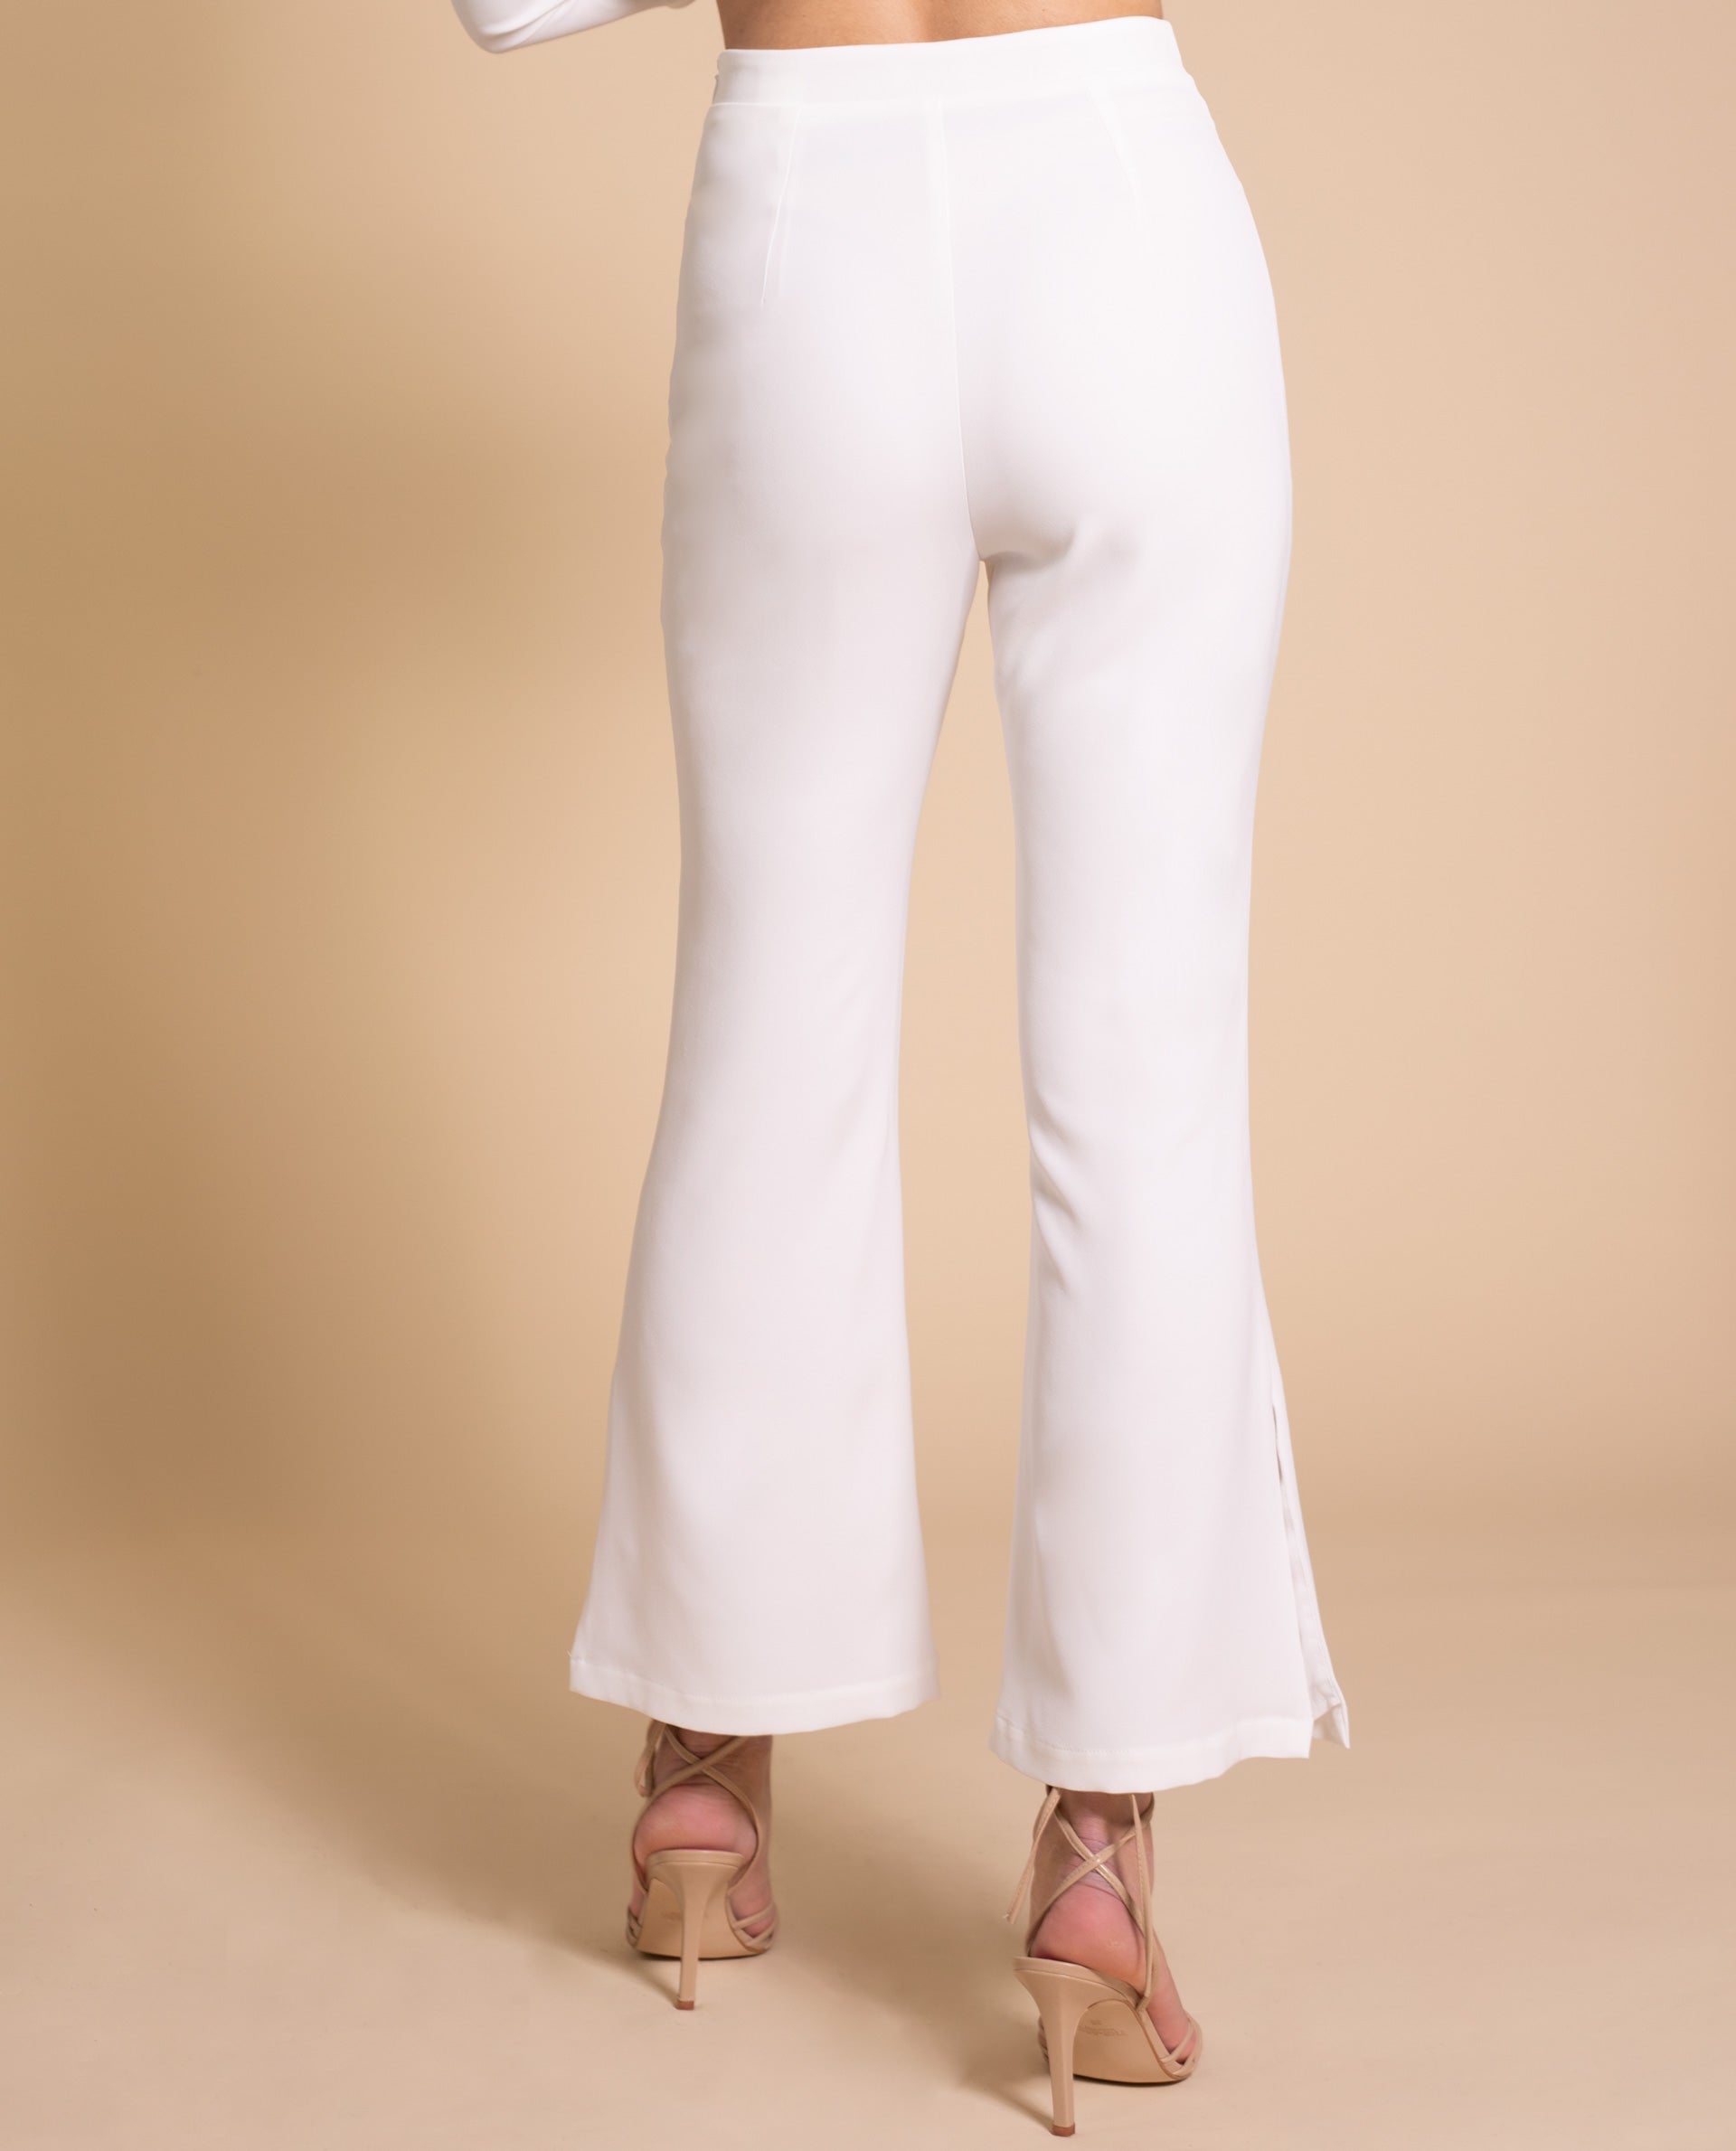 Pantalones blancos para mujer